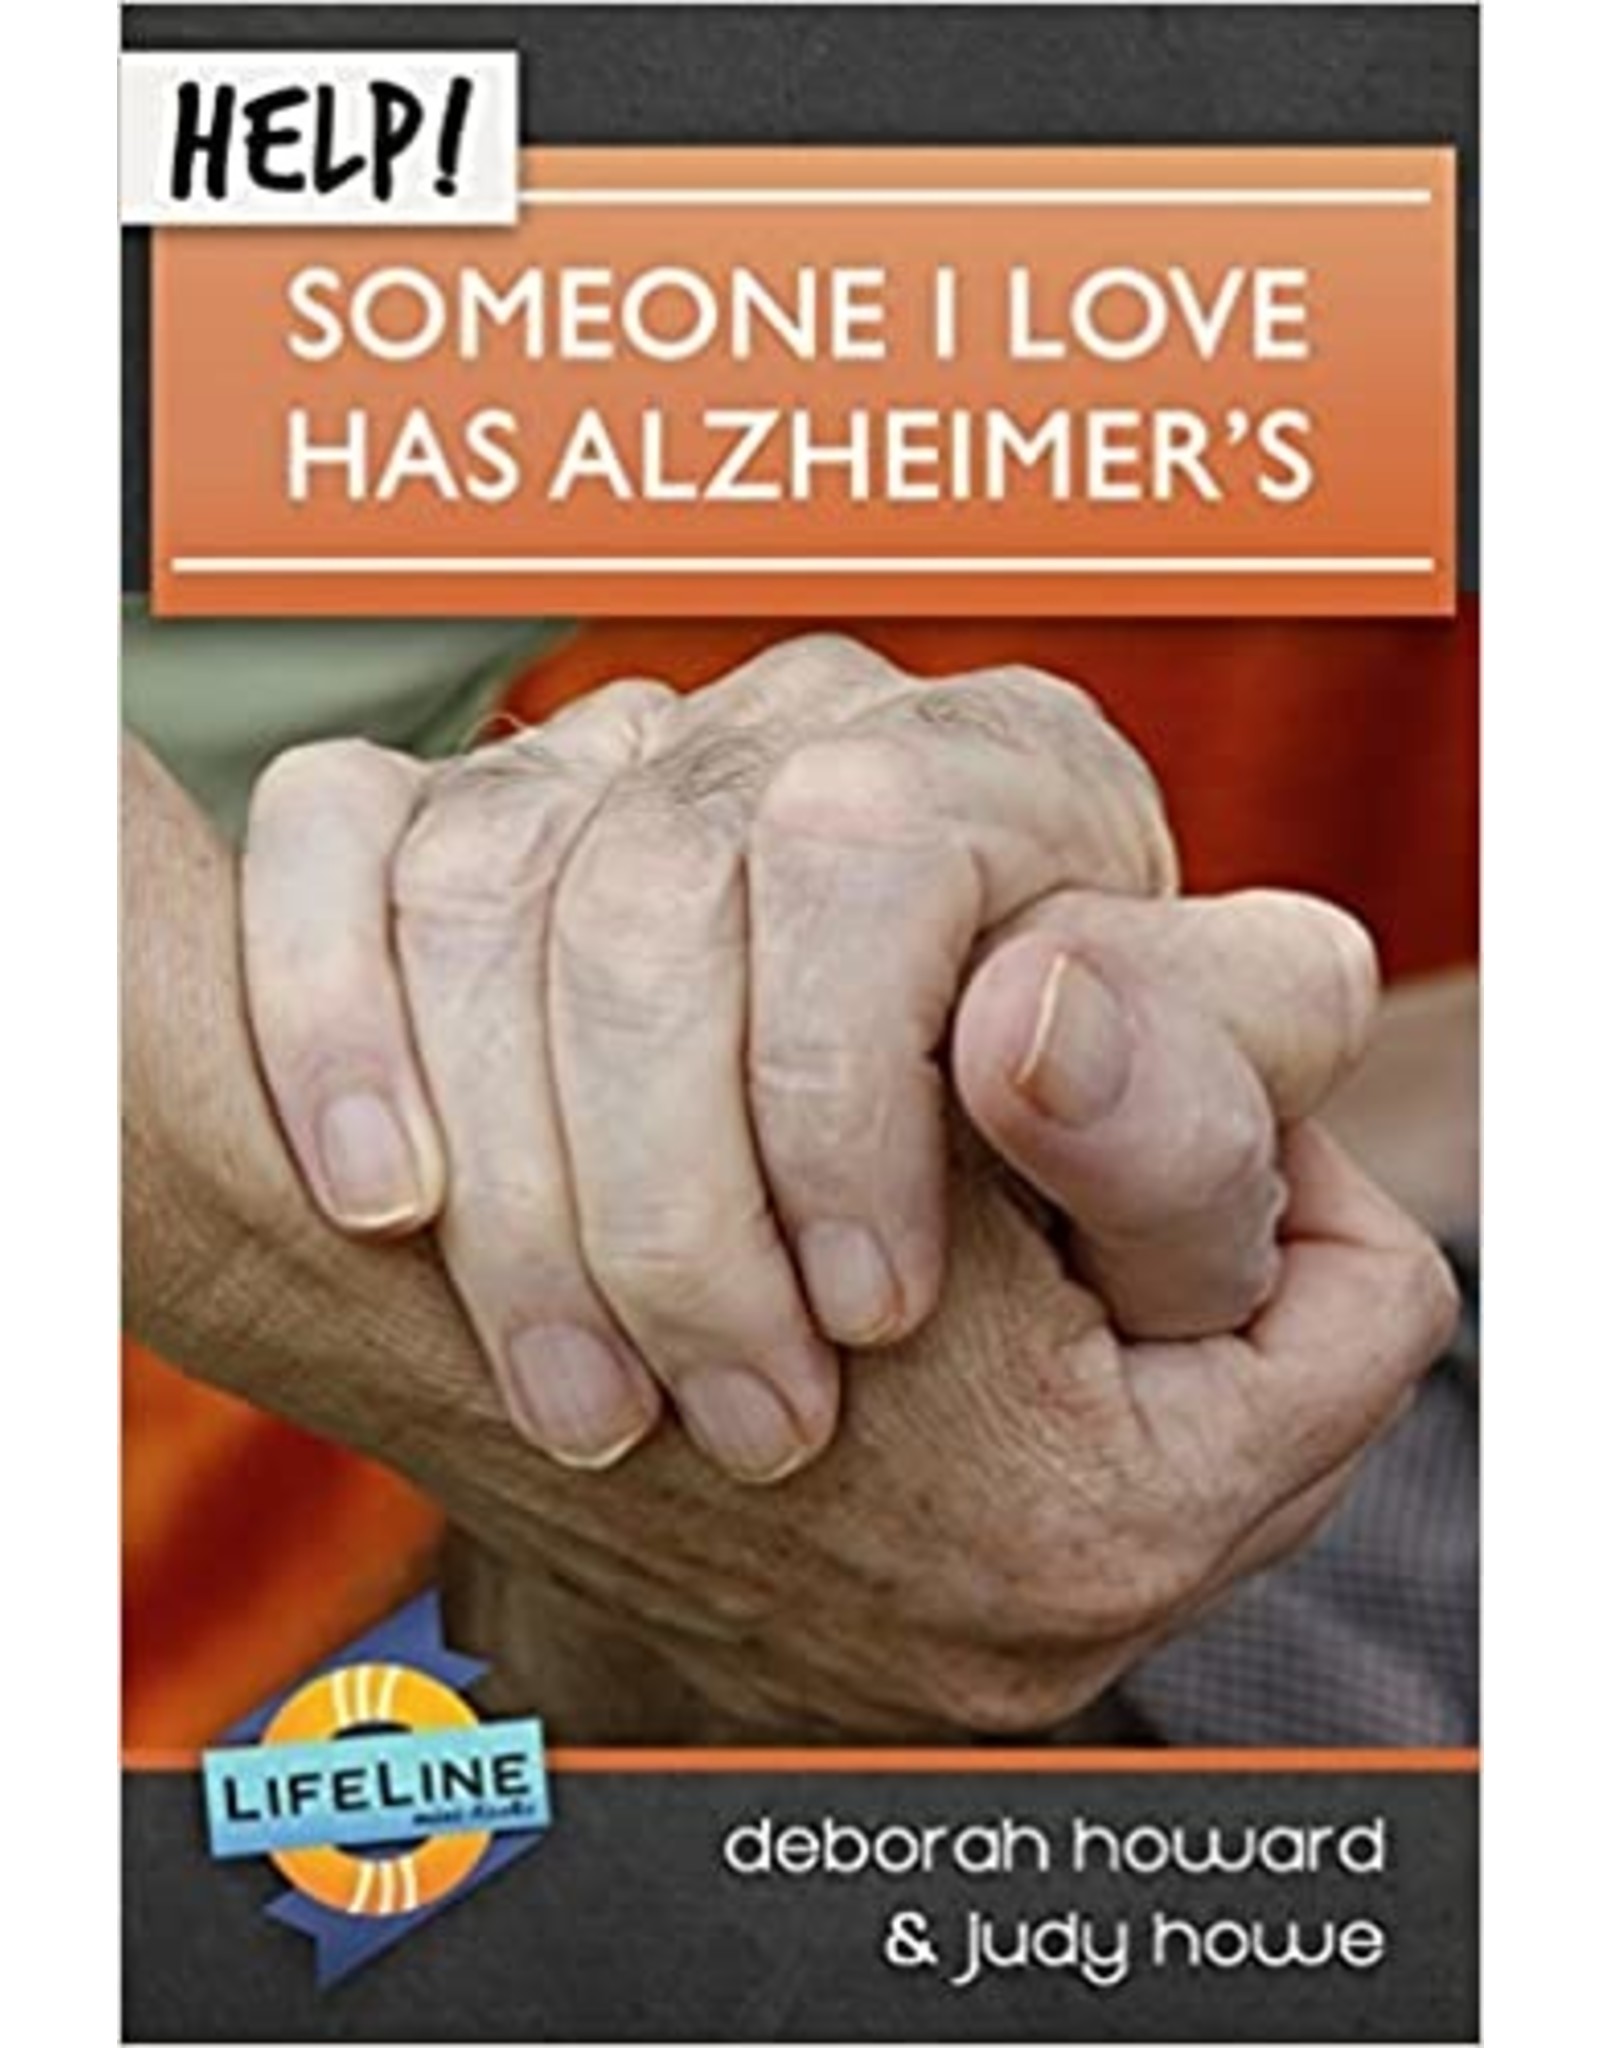 Help! Someone I love has Alzheimer's